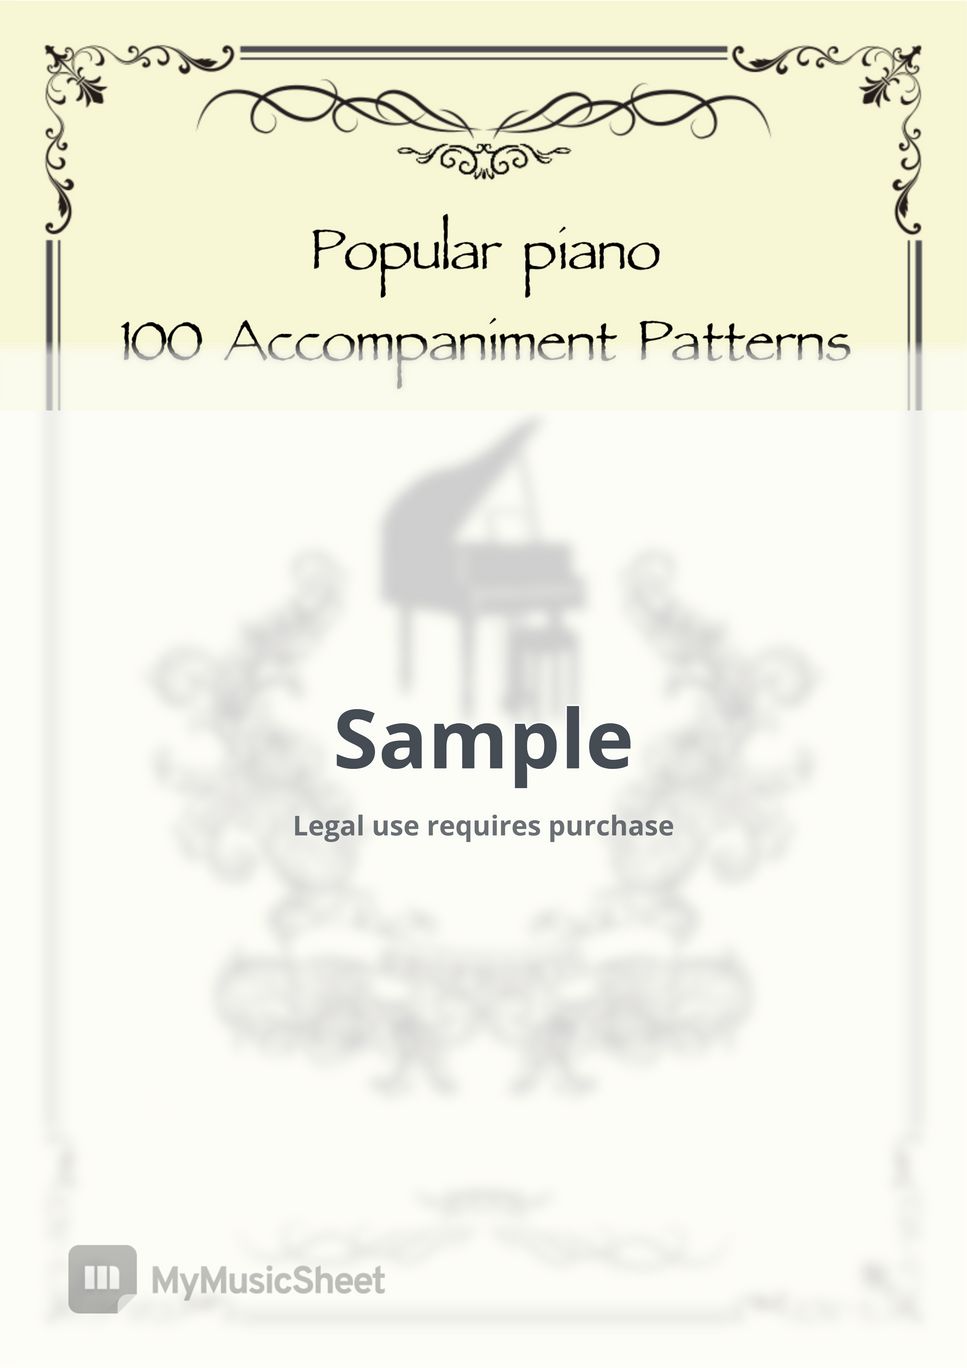 GEOPHONIC - 100 Accompaniment Patterns Full Korean Ver. by GEOPHONIC